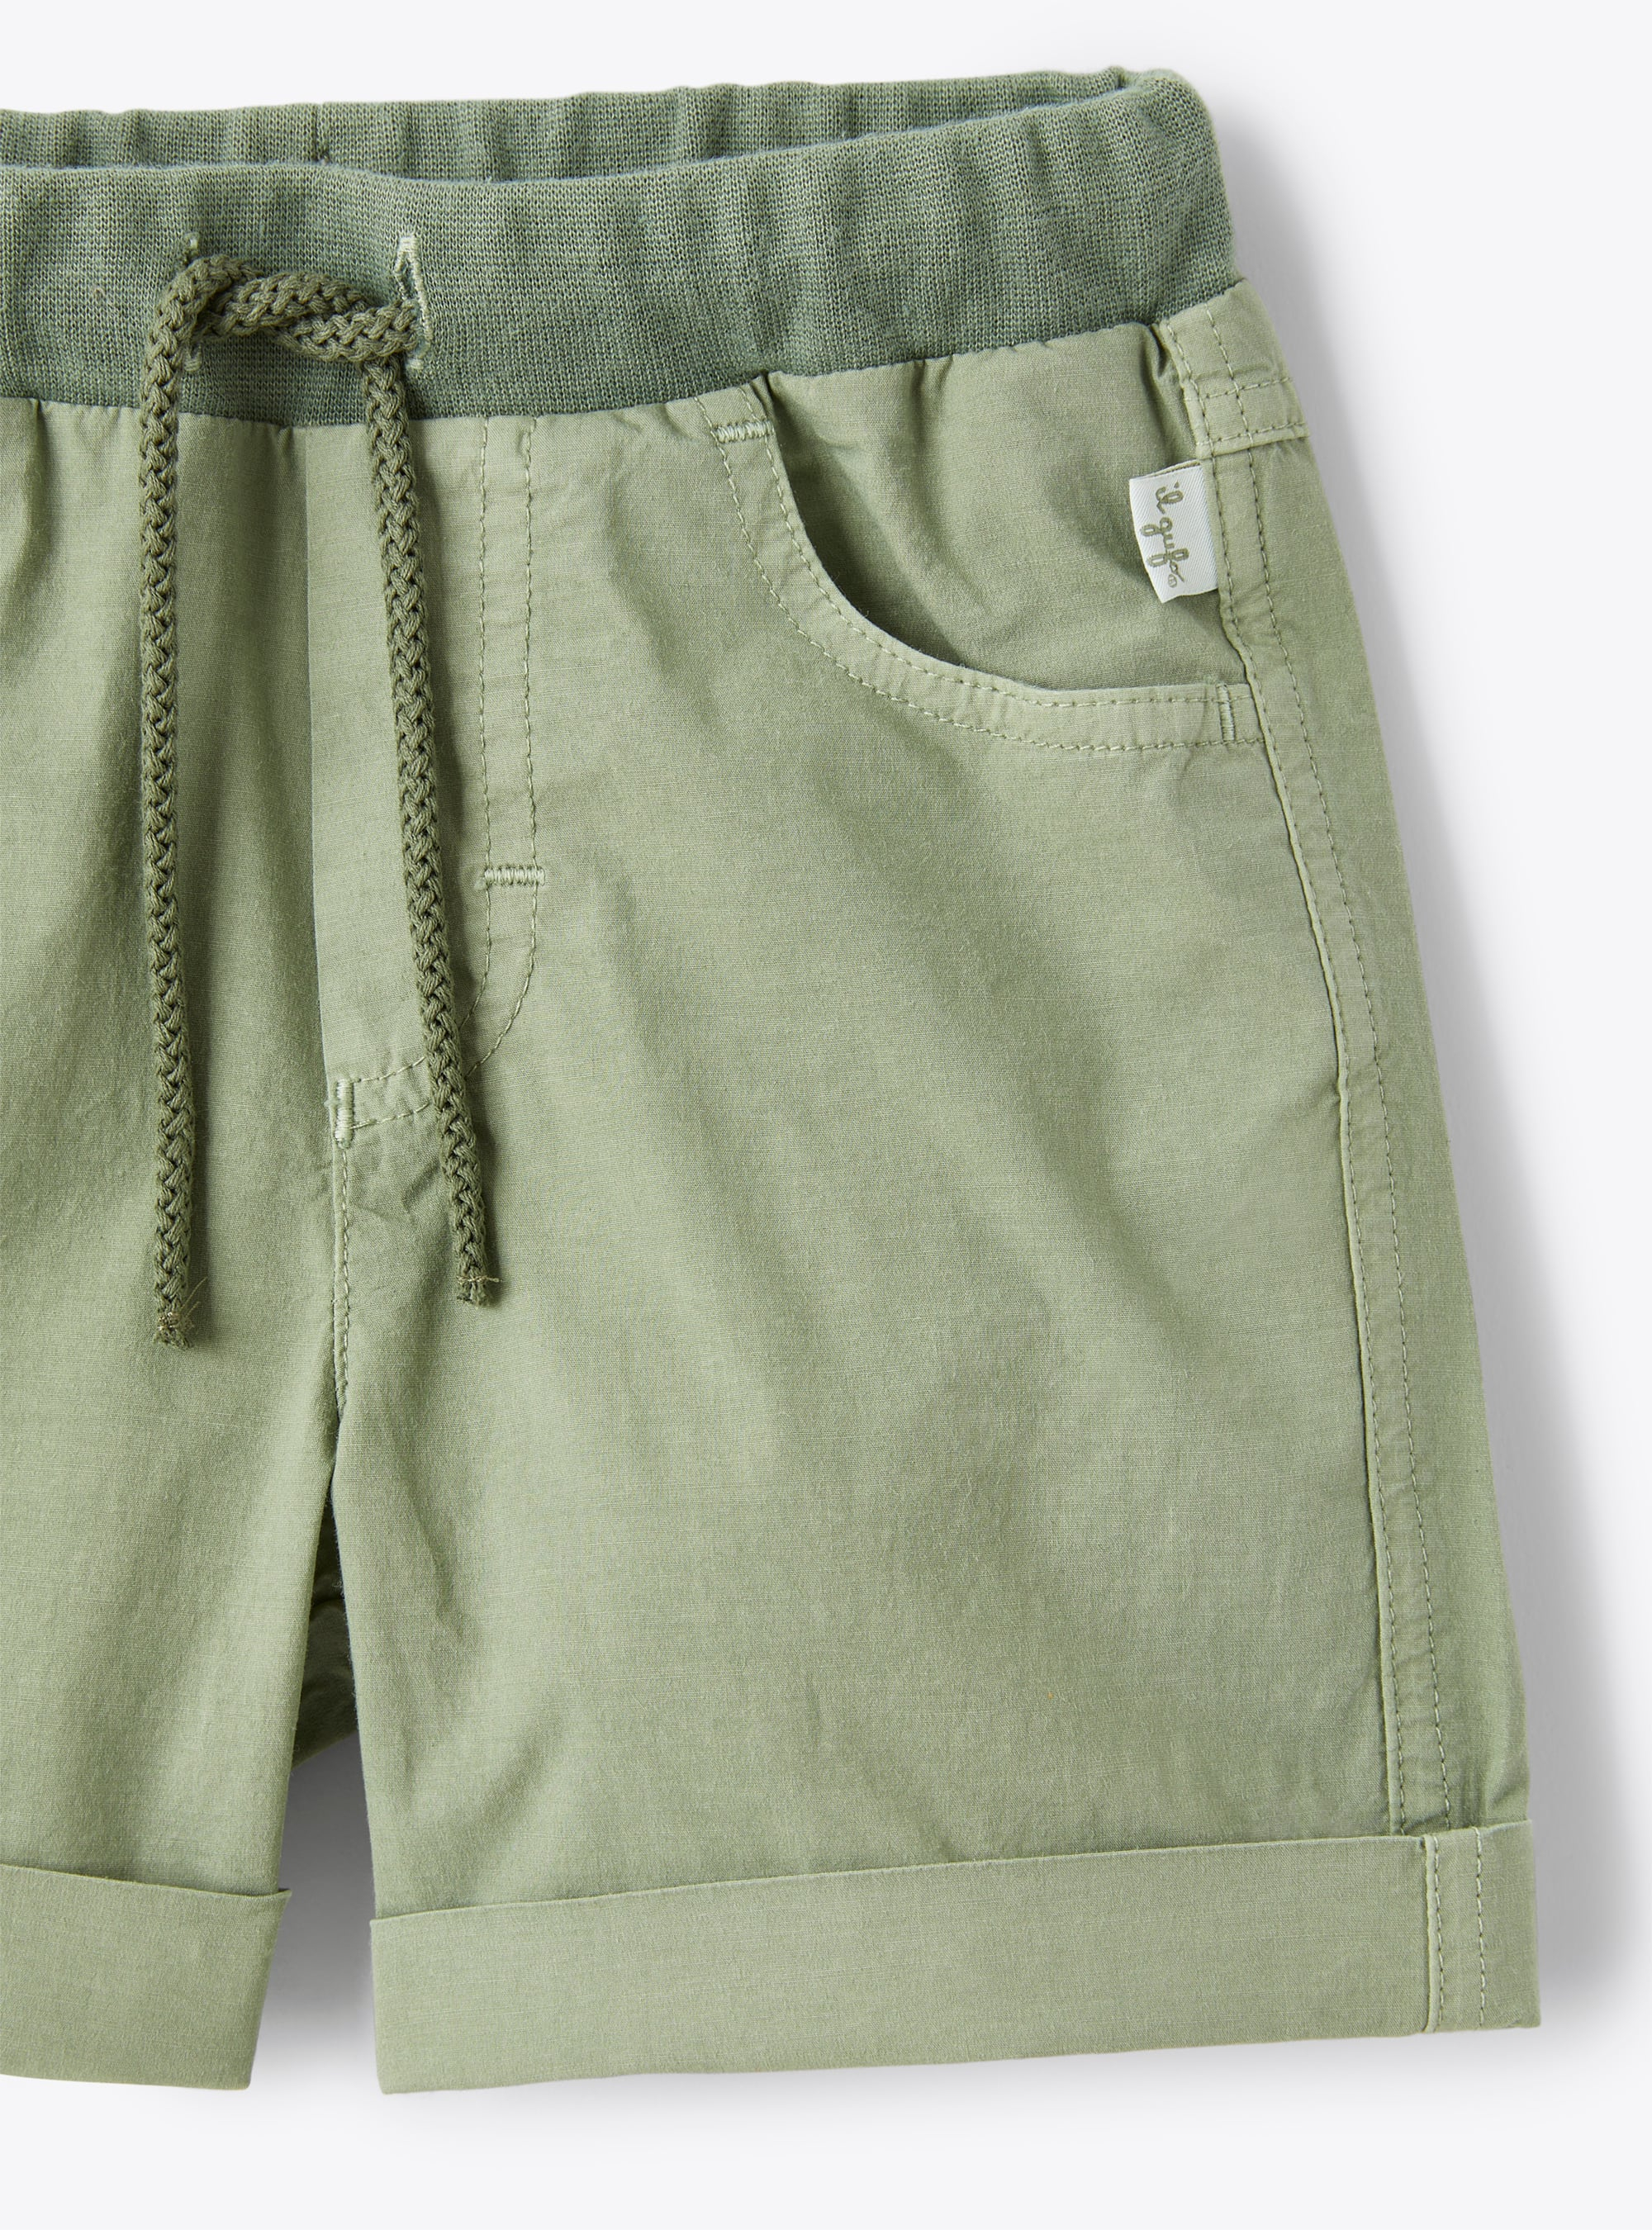 Bermuda shorts - Green | Il Gufo